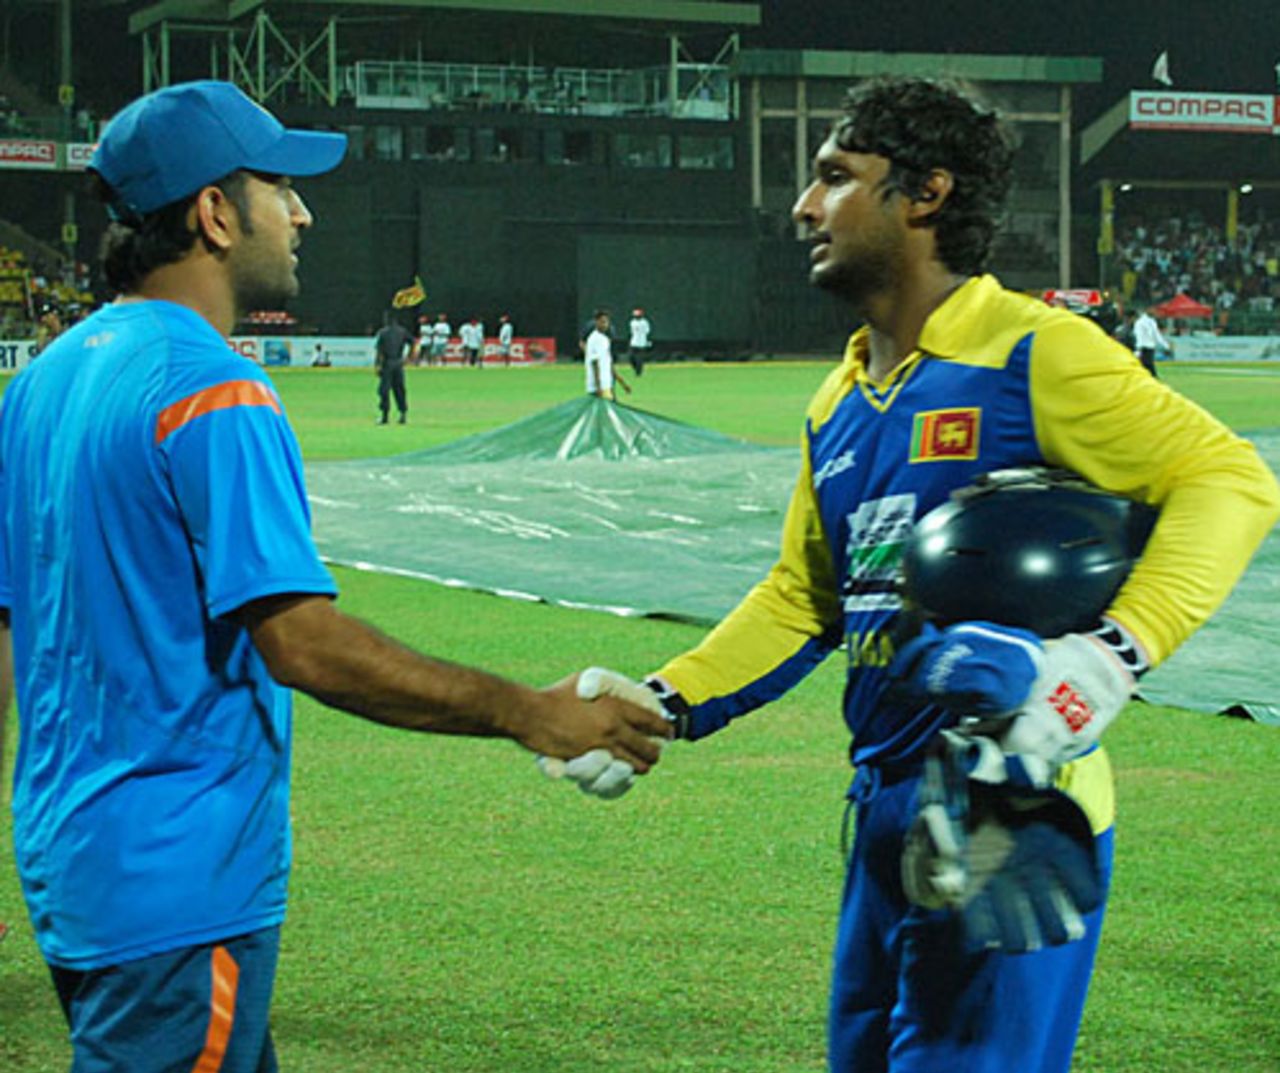 MS Dhoni and Kumar Sangakkara shake hands at the end of the match, Sri Lanka v India, Compaq Cup, 3rd match, Colombo, September 12, 2009